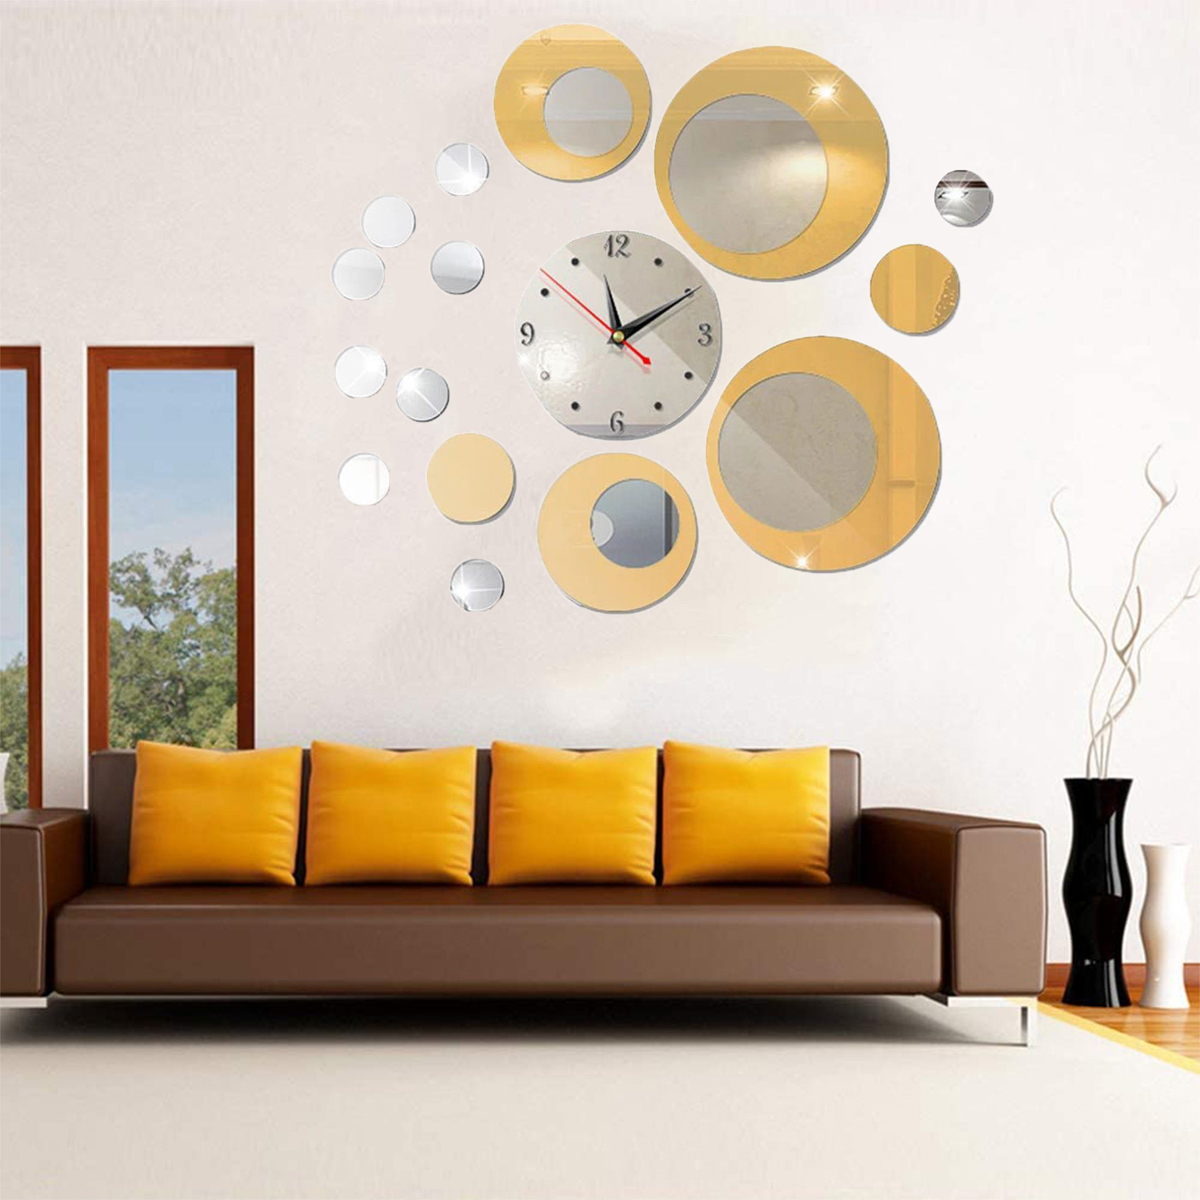 Holzwände,Metallwände Acrylspiegel Uhr DIY Dekorative DEDOM Wanduhr Wanduhr,für Wanduhr